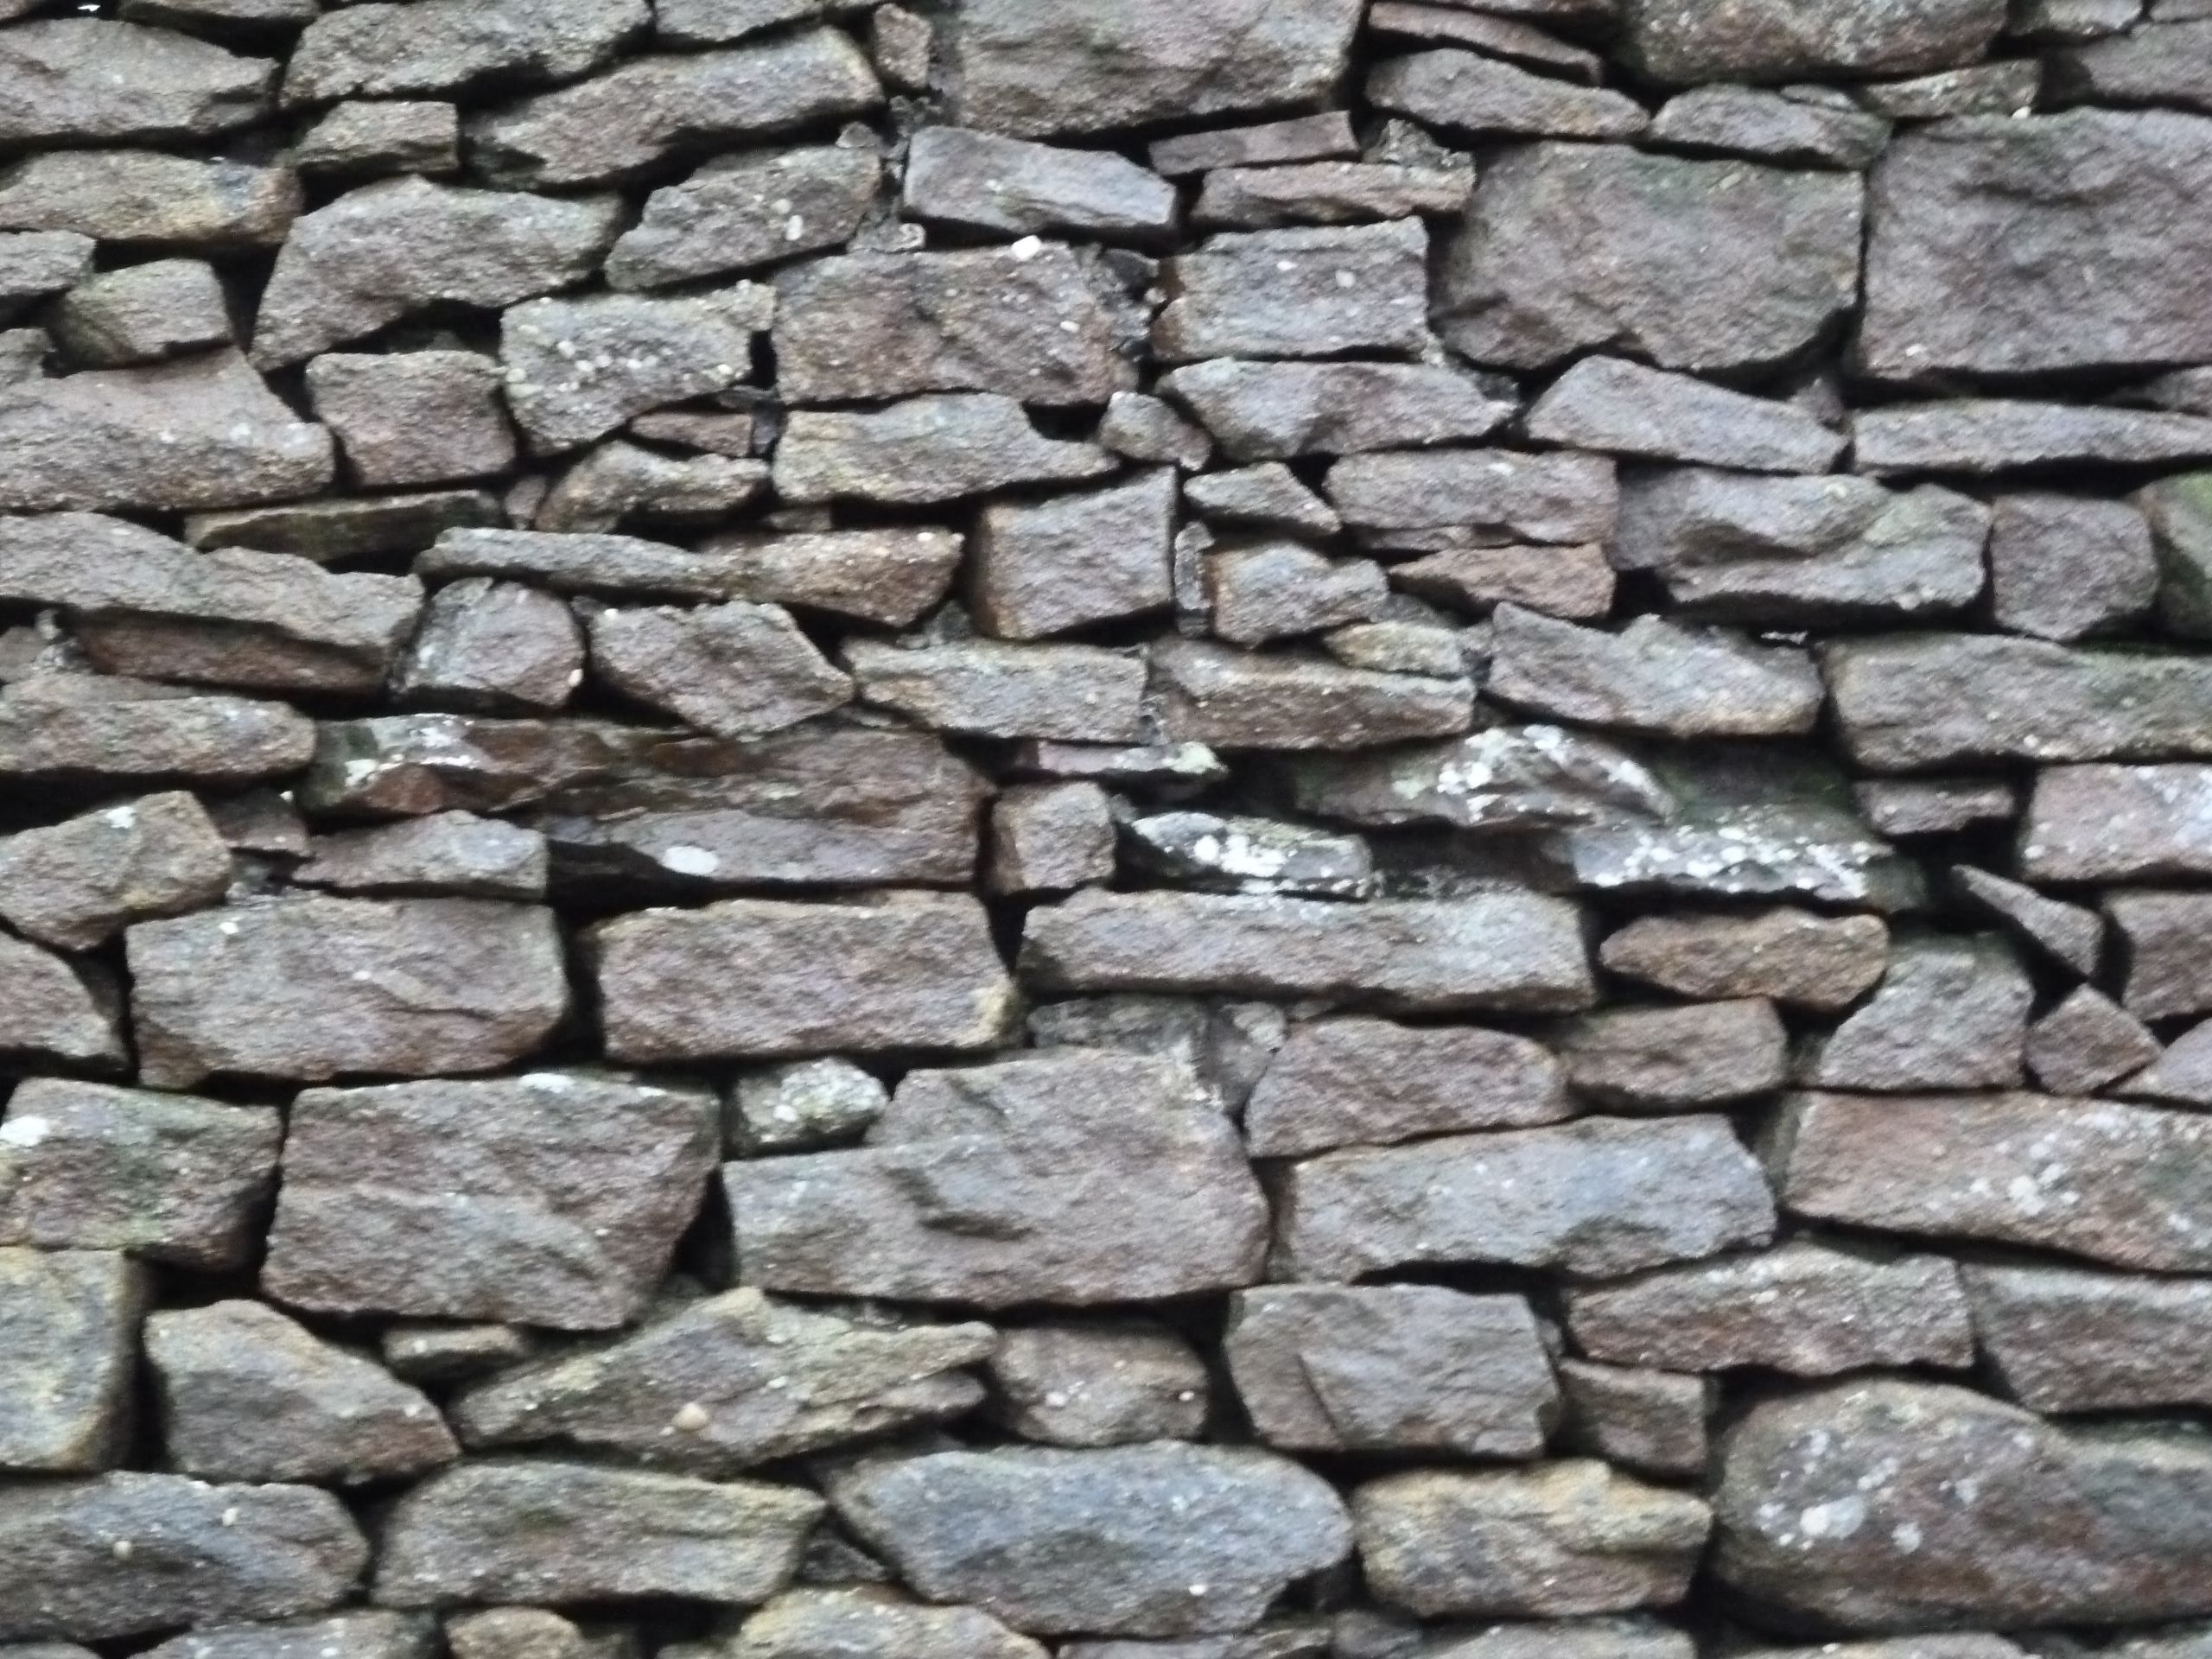 Pirca - stone walls - Buscar con Google | PH-Sea Path-Pircas ...